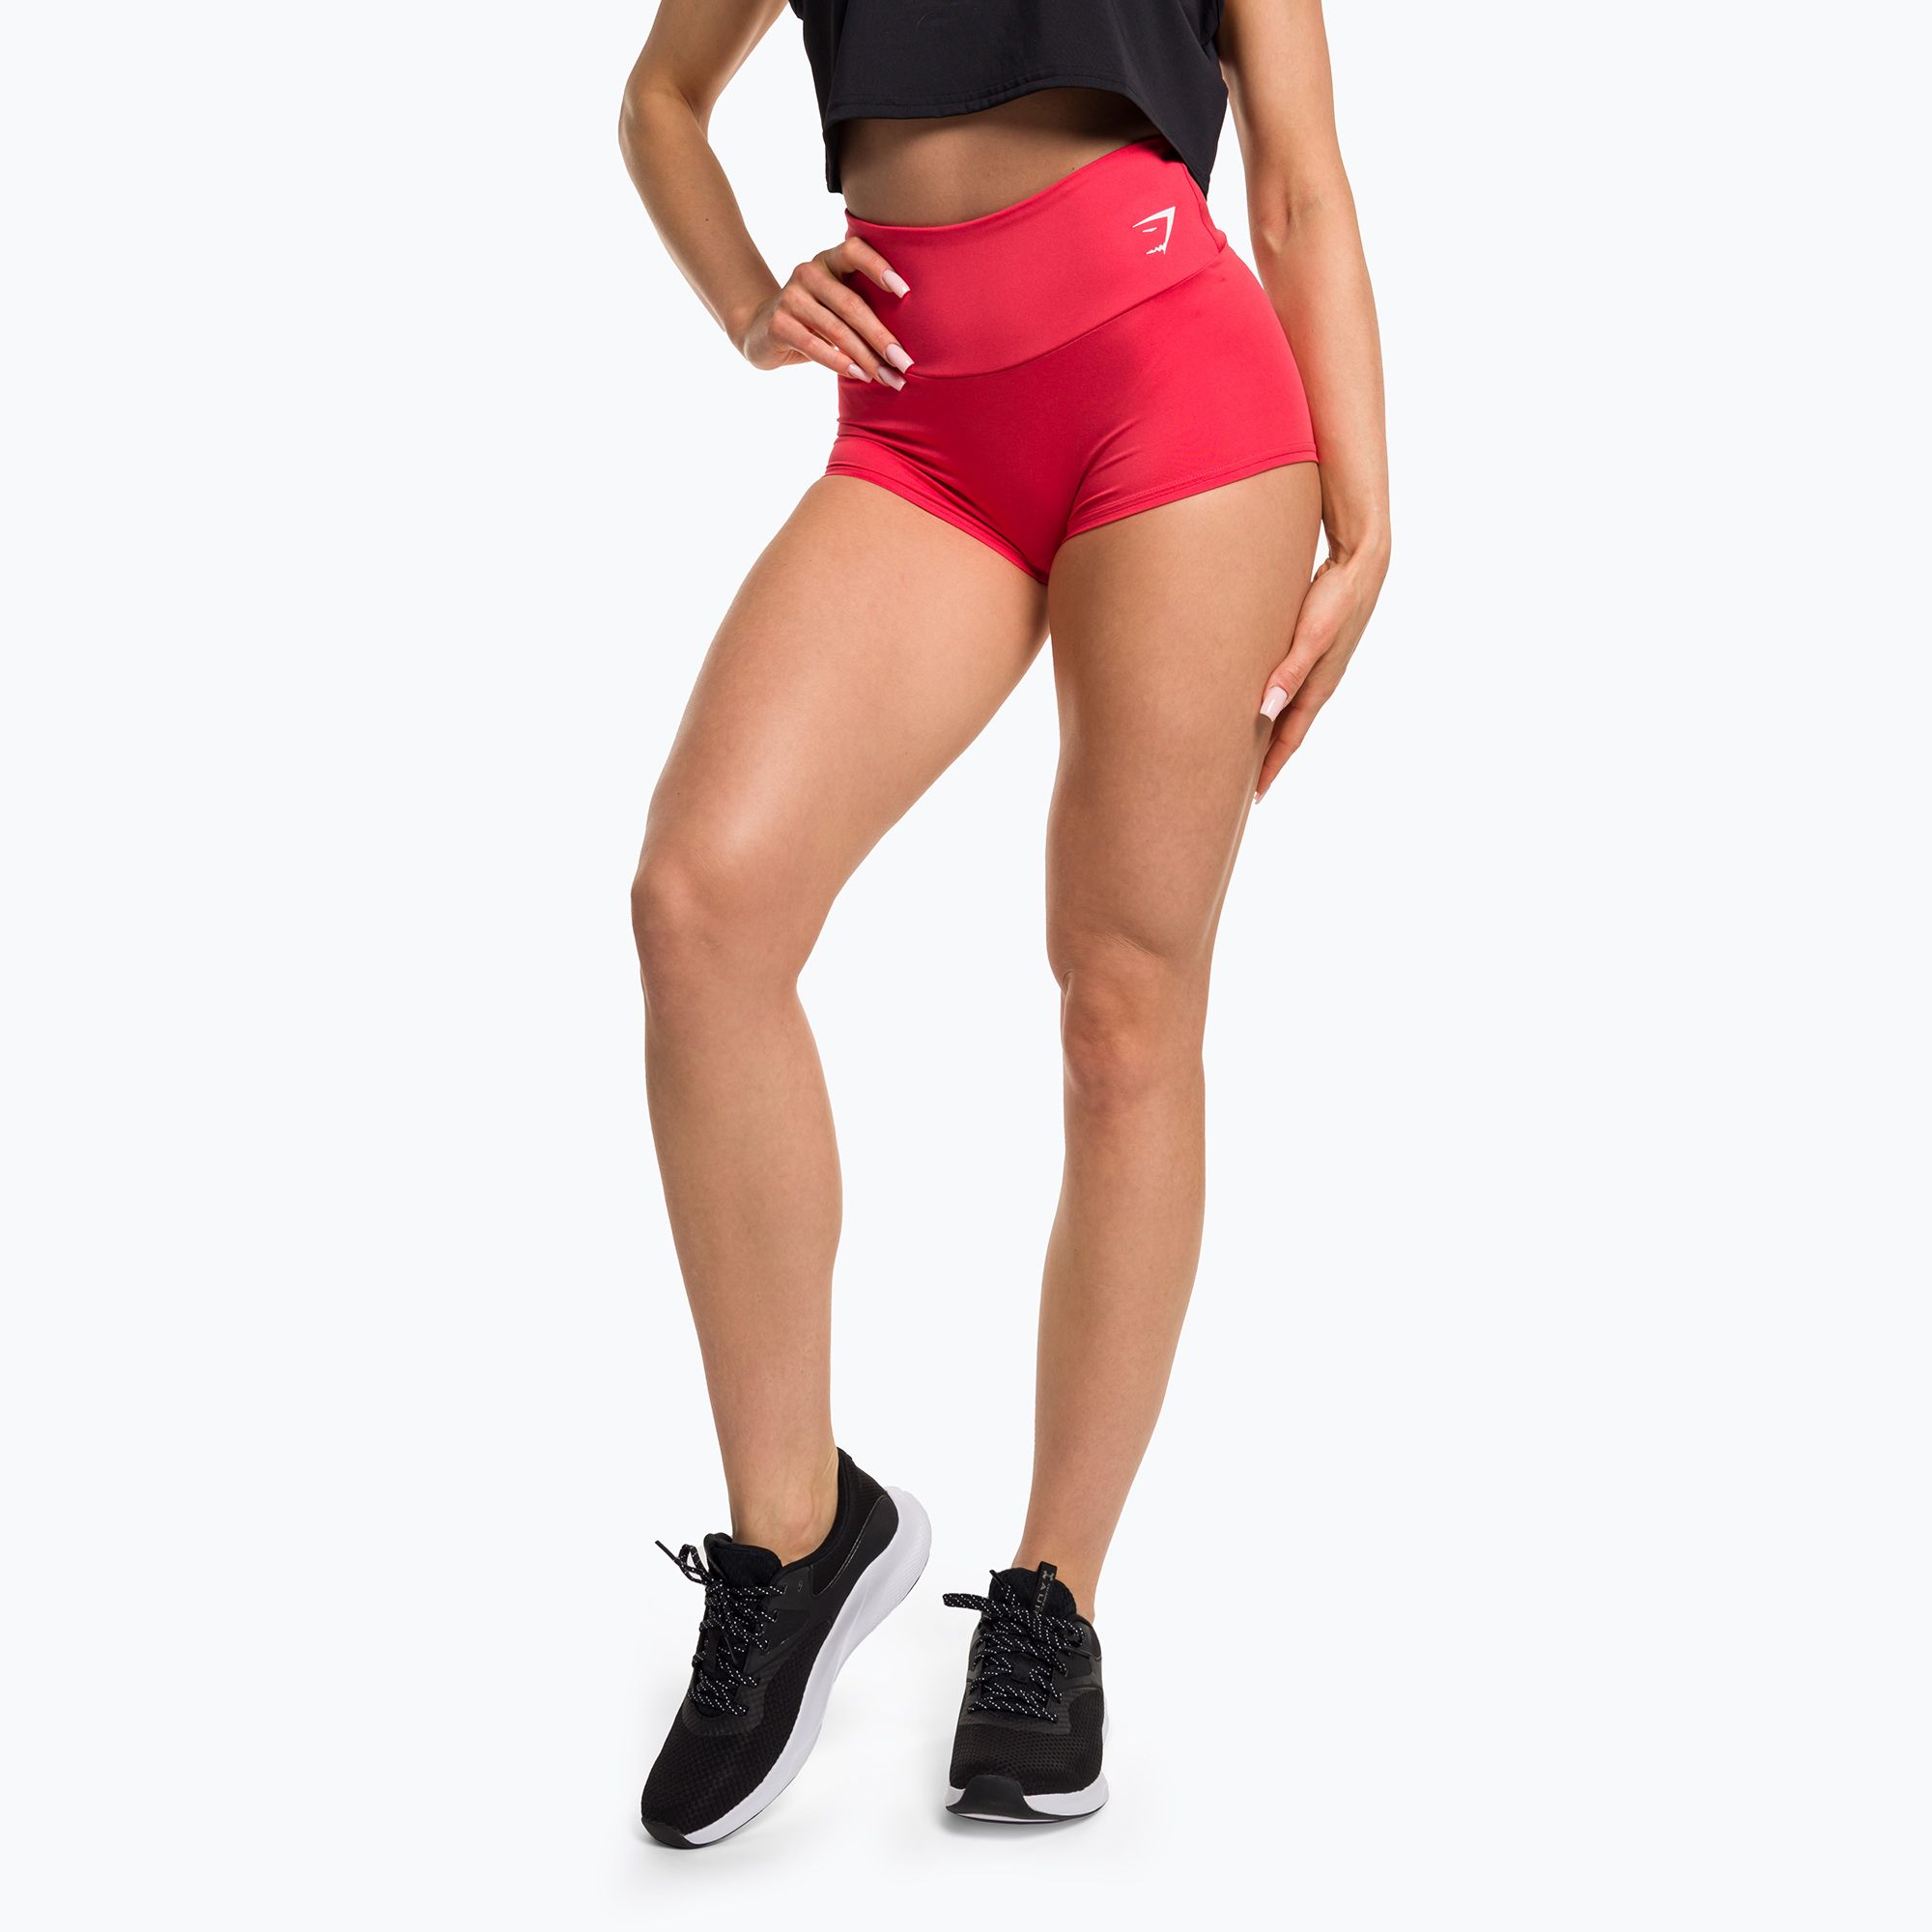 https://sportano.com/img/986c30c27a3d26a3ee16c136f92f4ff5/5/0/5057913290757_1-jpg/women-s-training-shorts-gymshark-training-quad-raspberry-red-0.jpg